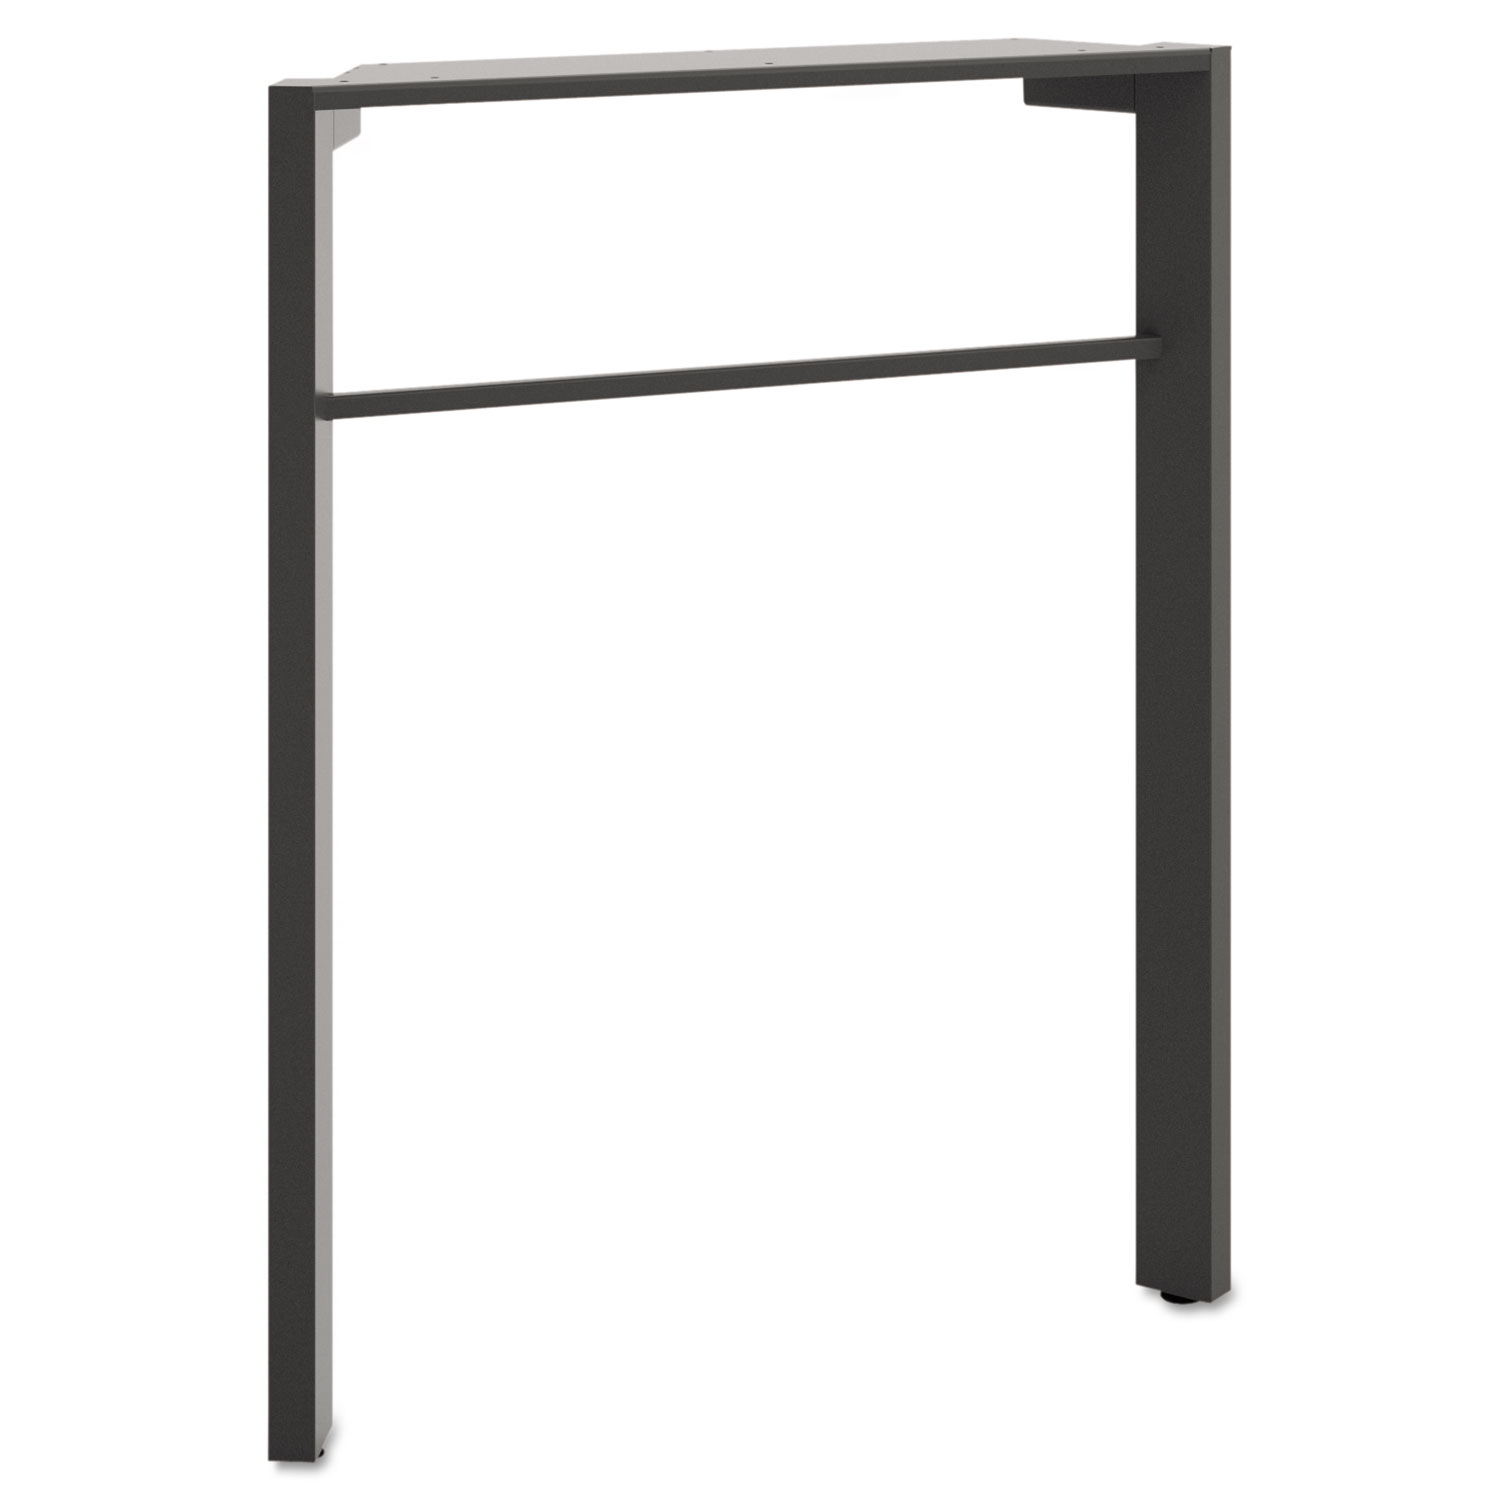  HON HMNGDLEG.A1 Manage Series Desk Leg, Steel, 2.25w x 23.5d x 28.5h, Ash (BSXMGDLEGA1) 